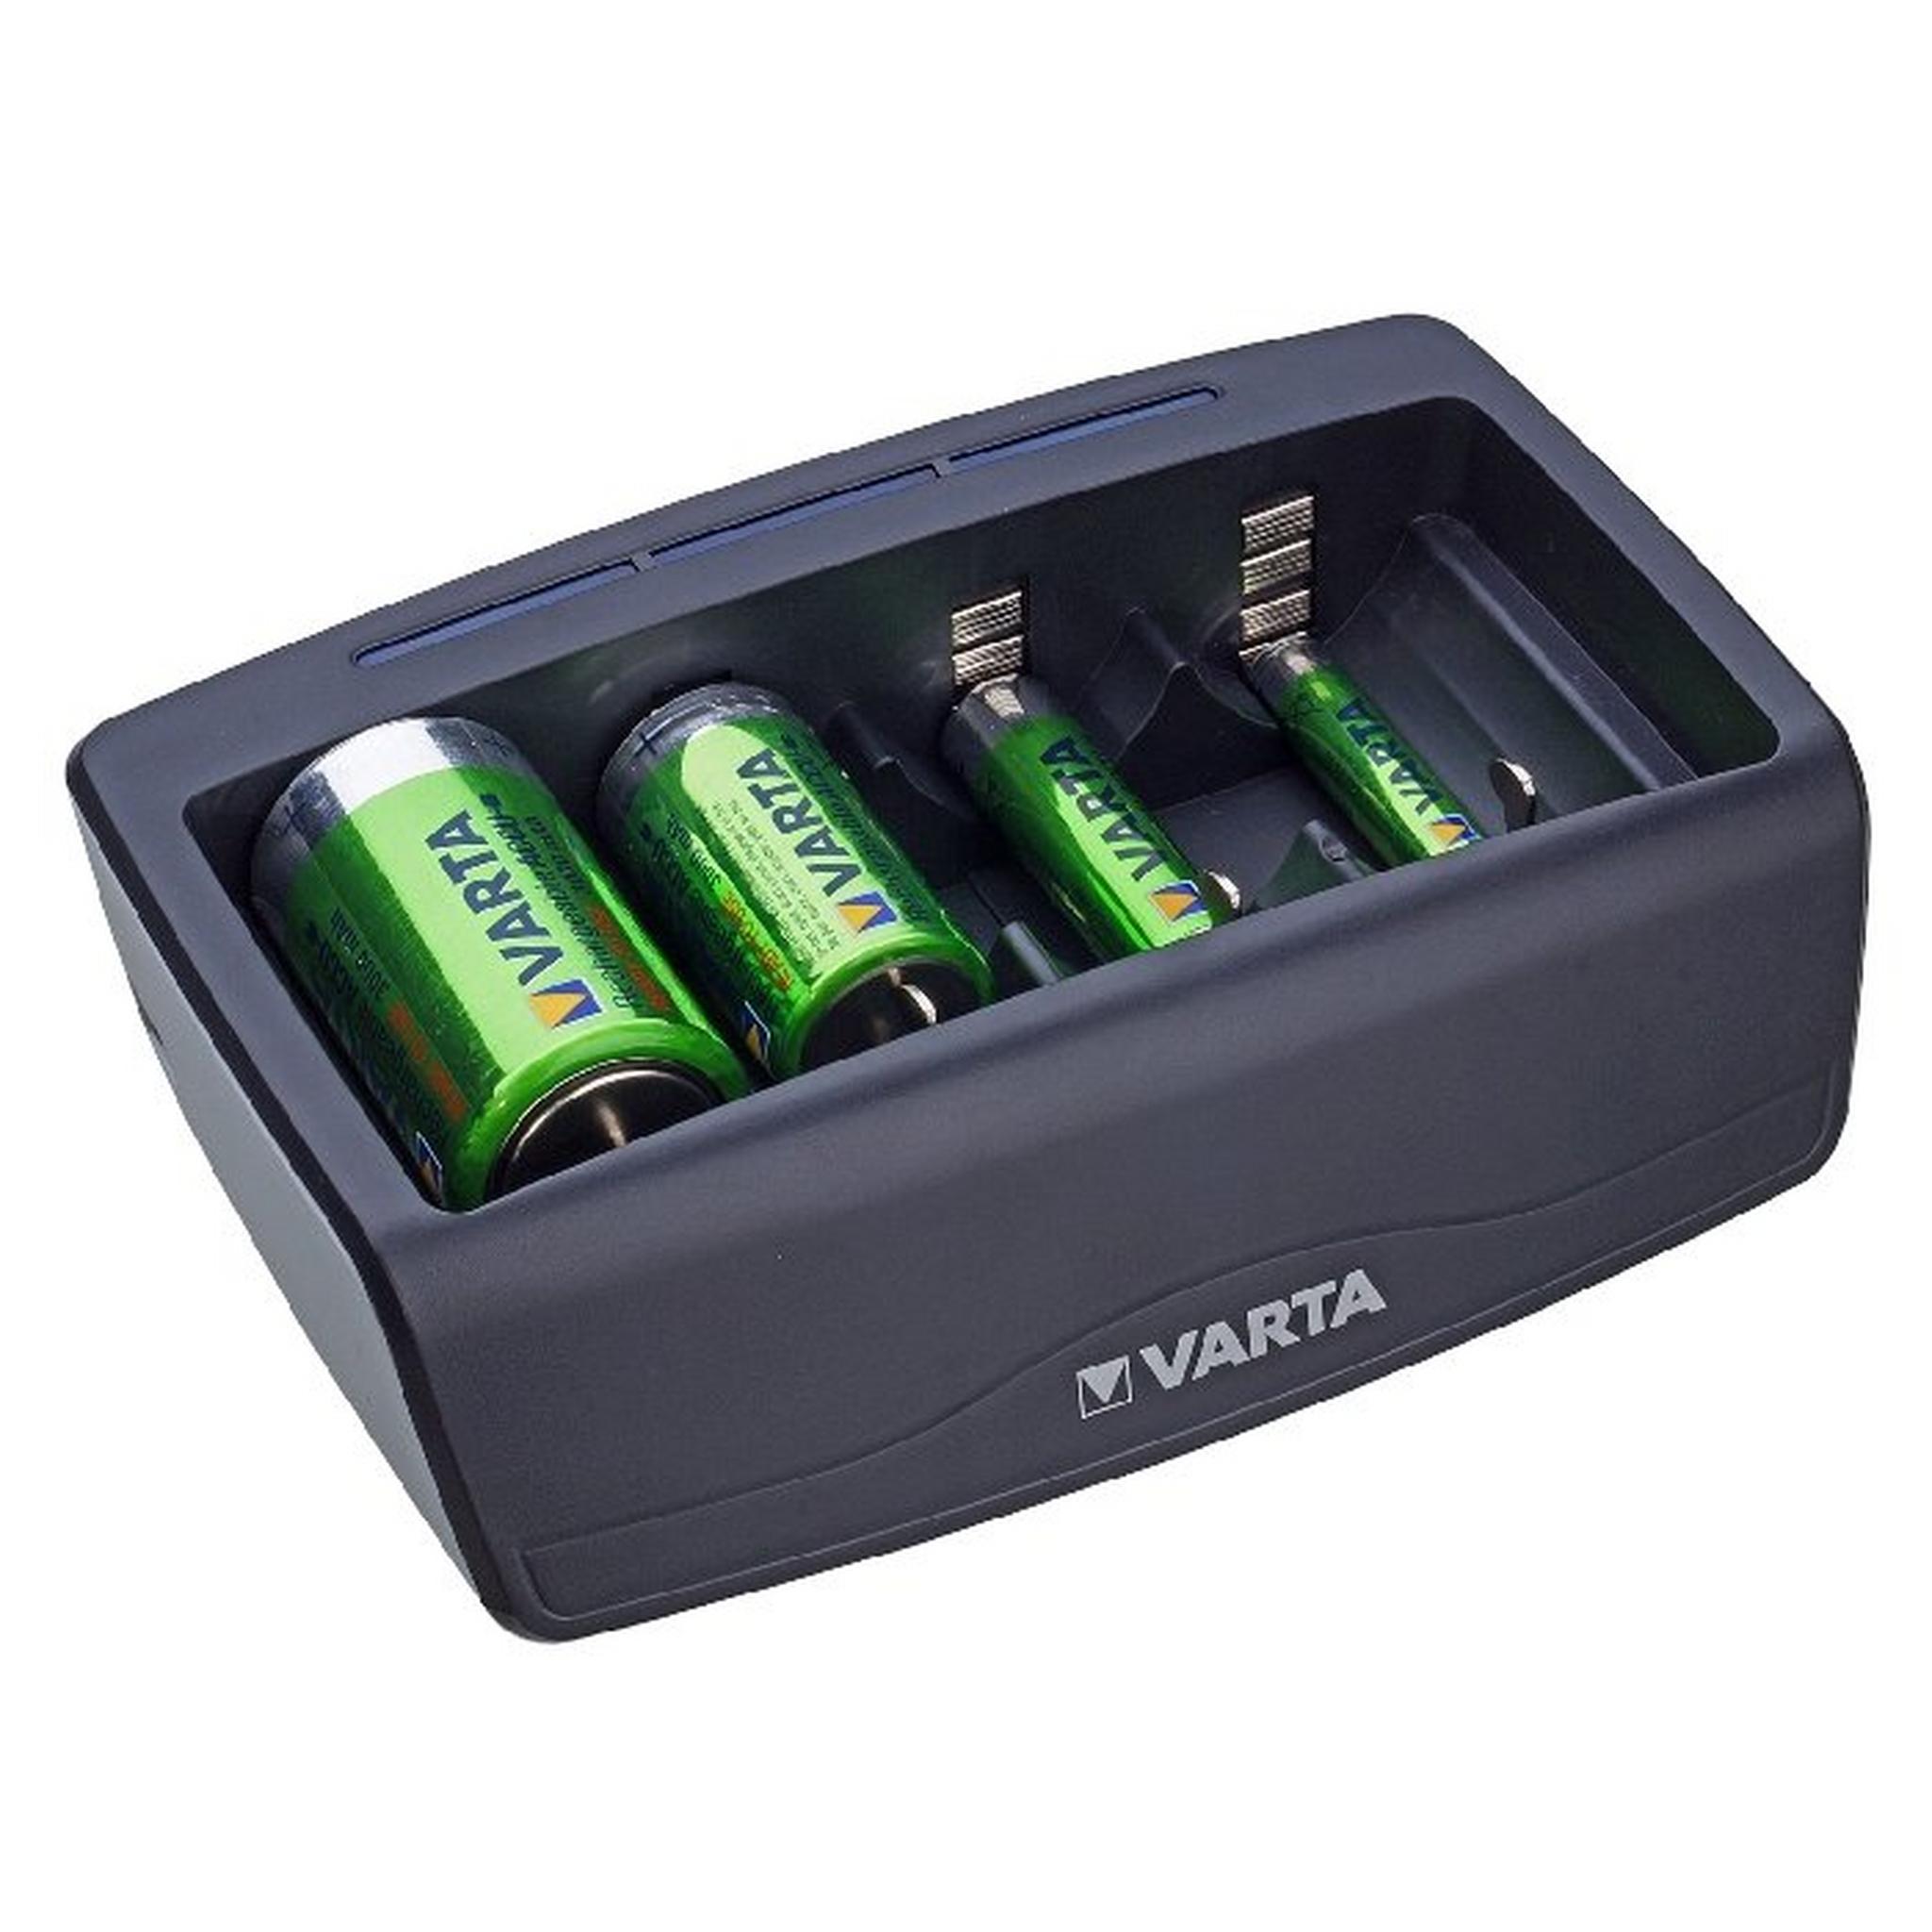 Varta Universal Battery Charger